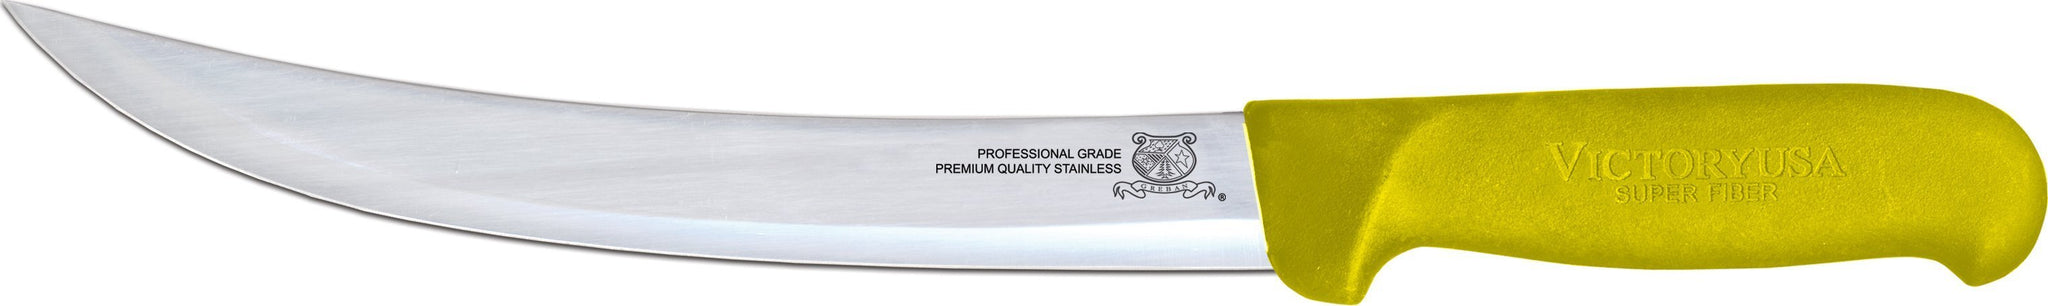 Omcan - 8” Victoria USA Breaking Knife with Yellow Super Fiber Handle, 4/cs - 23893